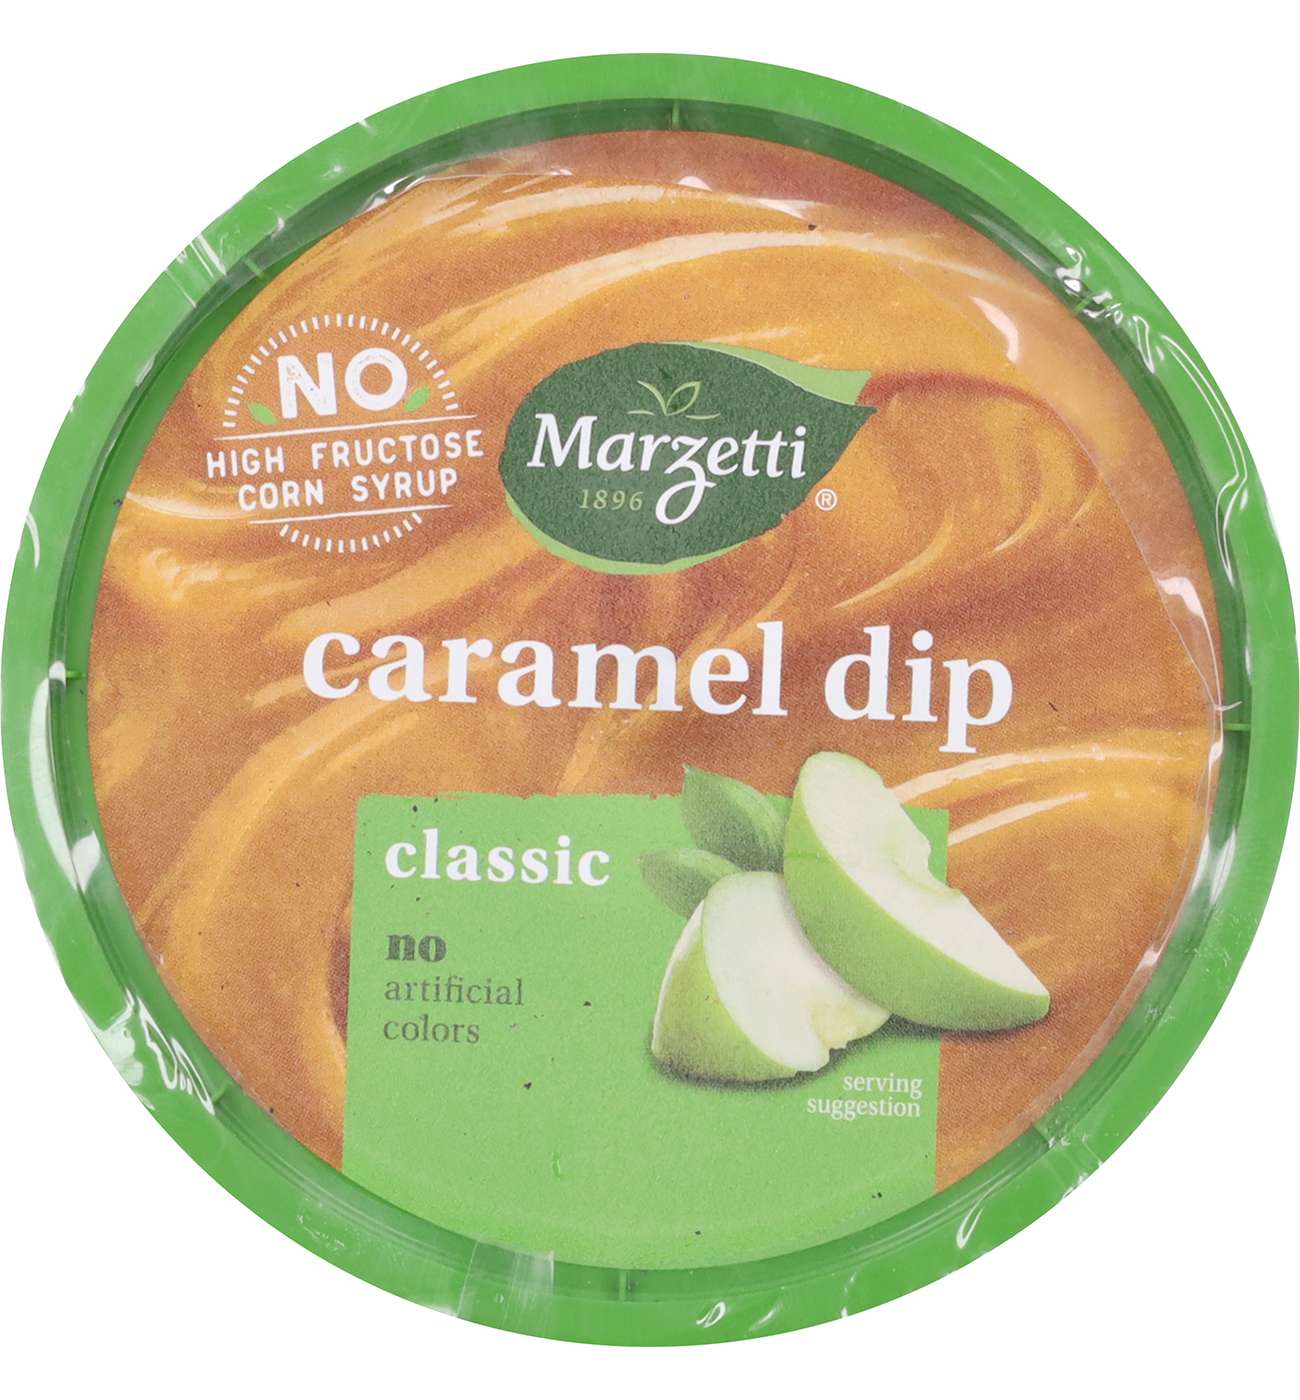 Marzetti Caramel Dip - Classic; image 3 of 4